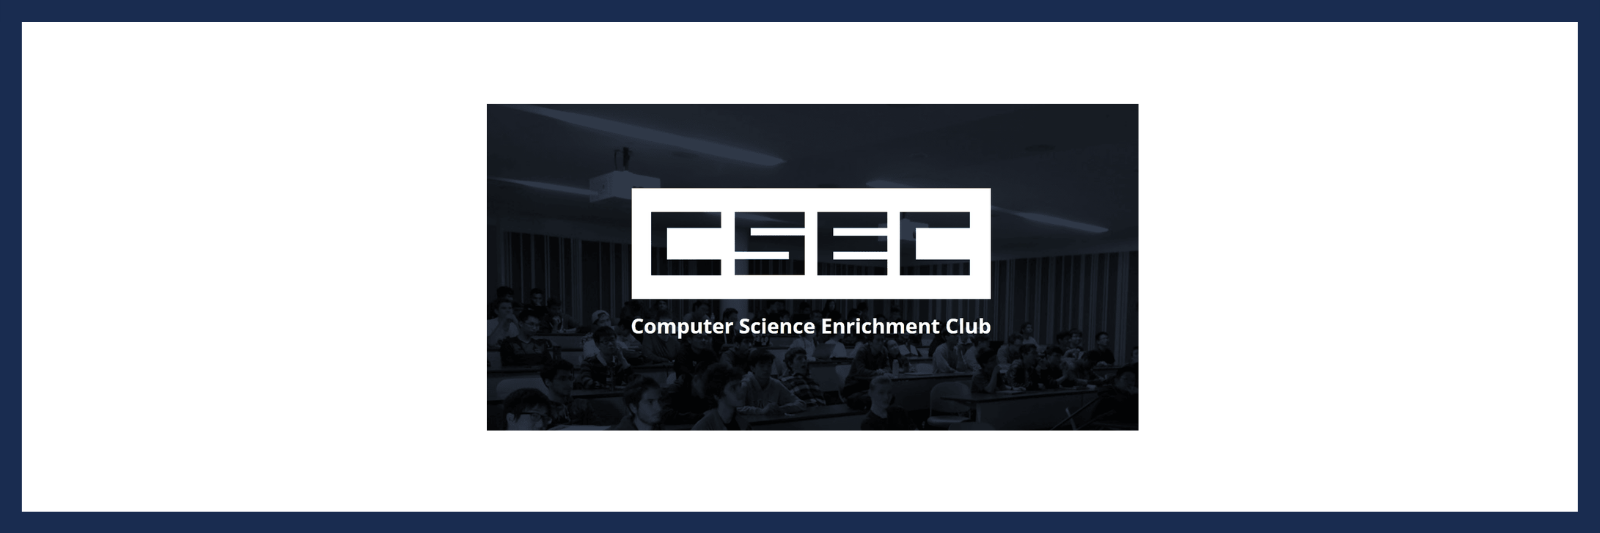 Computer Science Enrichment Club